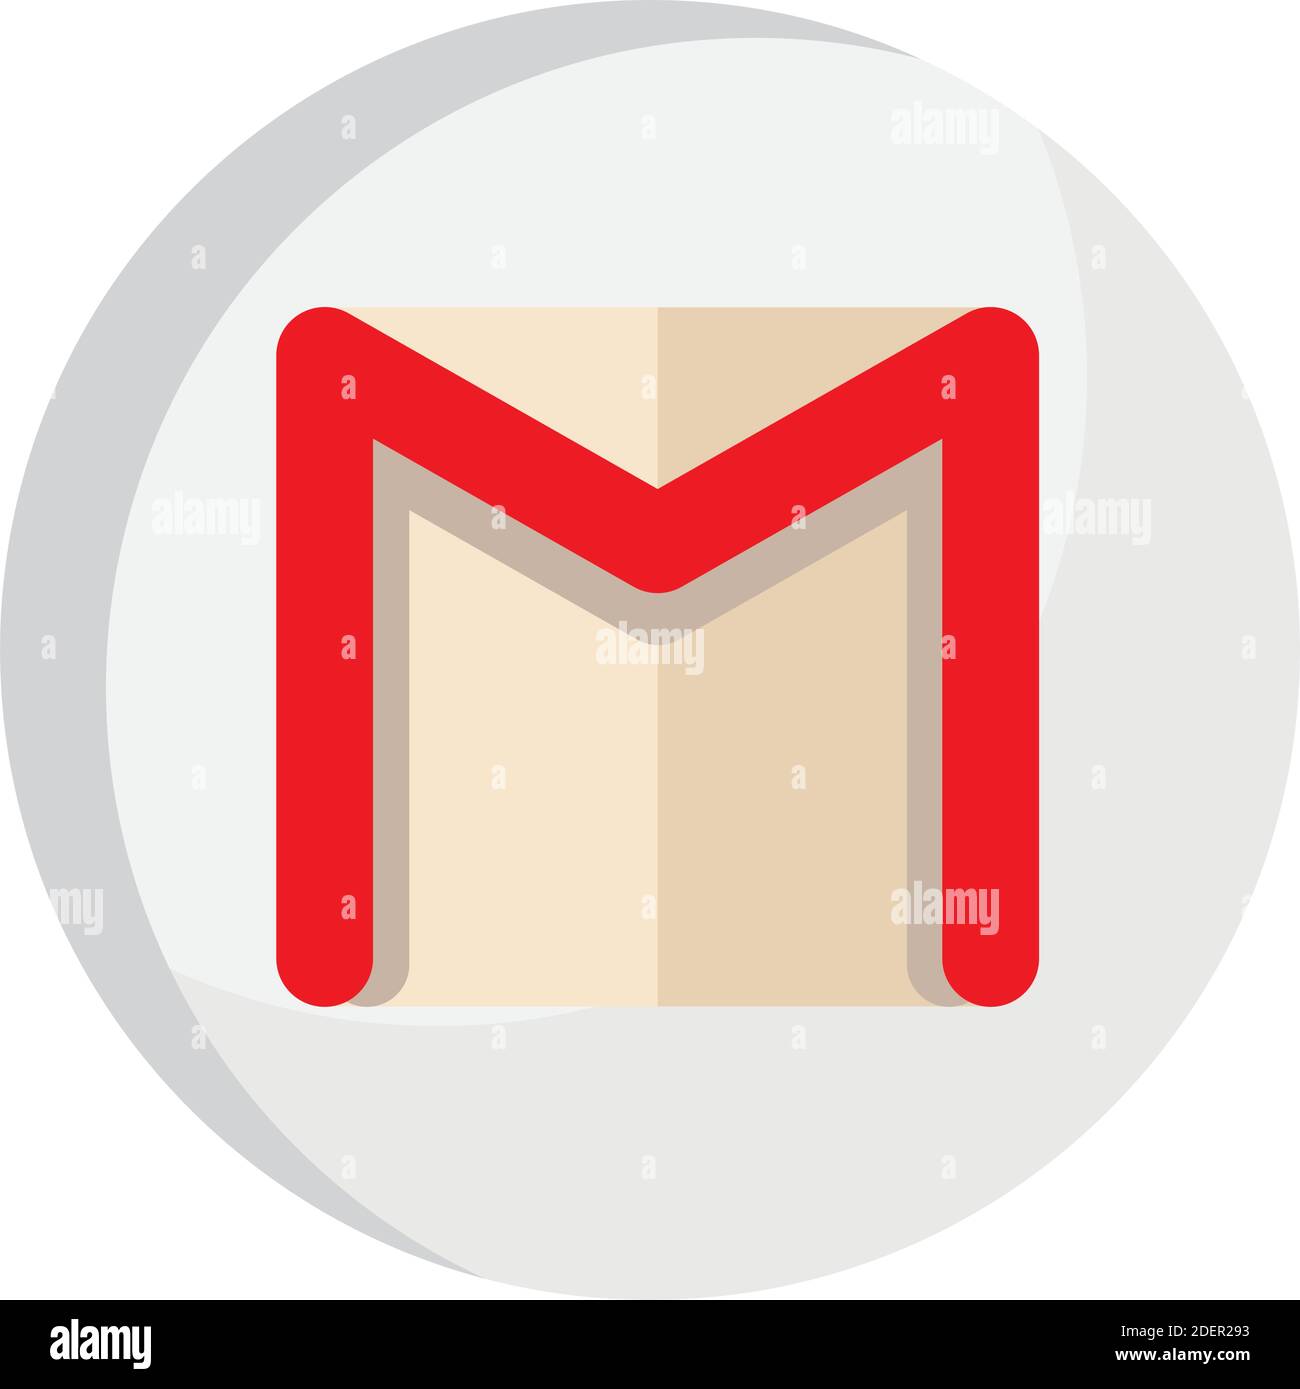 gmail social media logo flat style icon Stock Vector